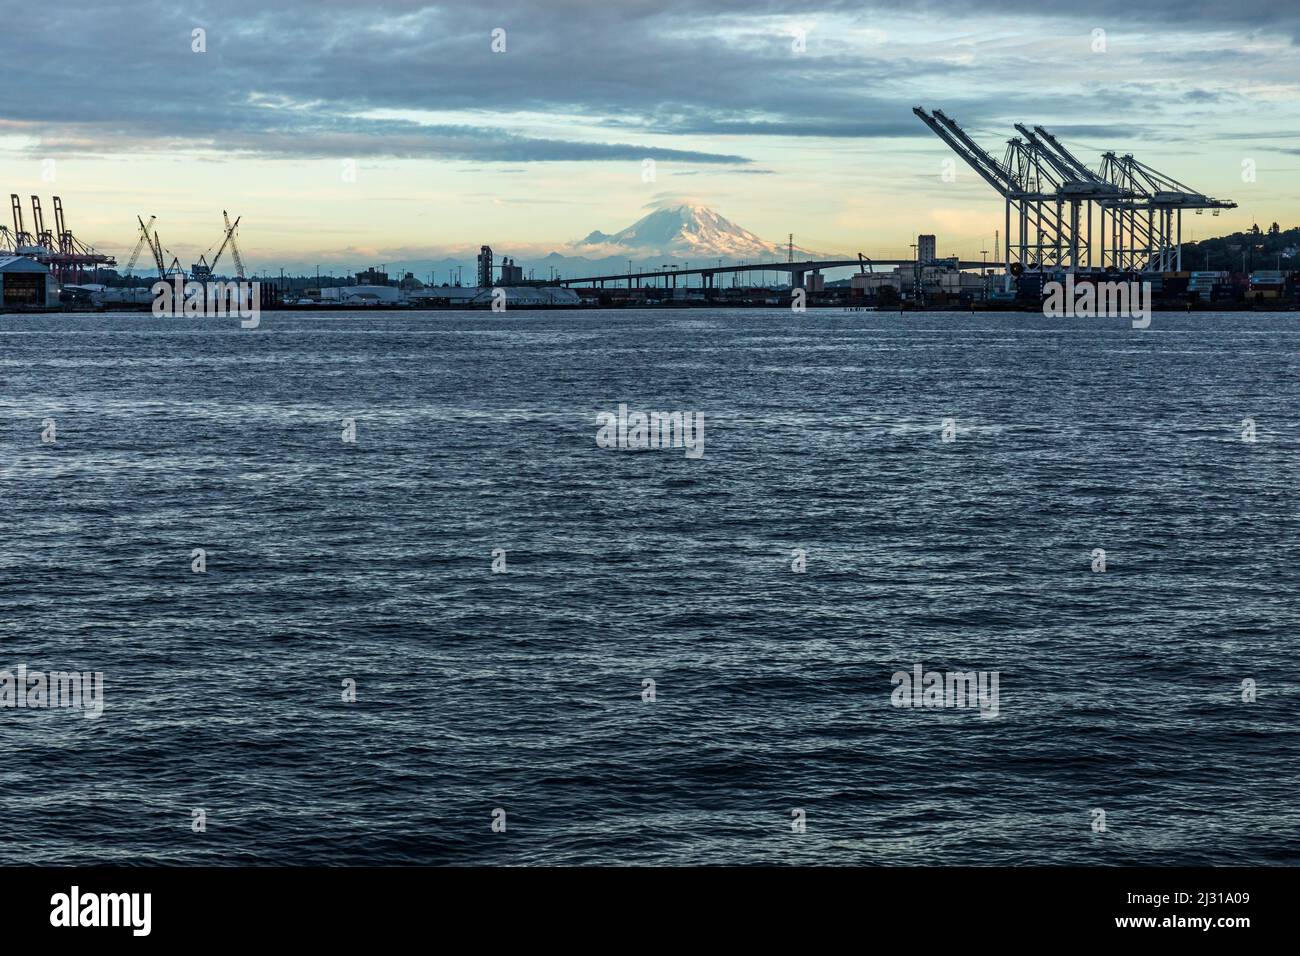 Looking across the waters of Elliott Bay toward the West Seattle Bridge, Harbor Island, and Mount Rainier. Stock Photo